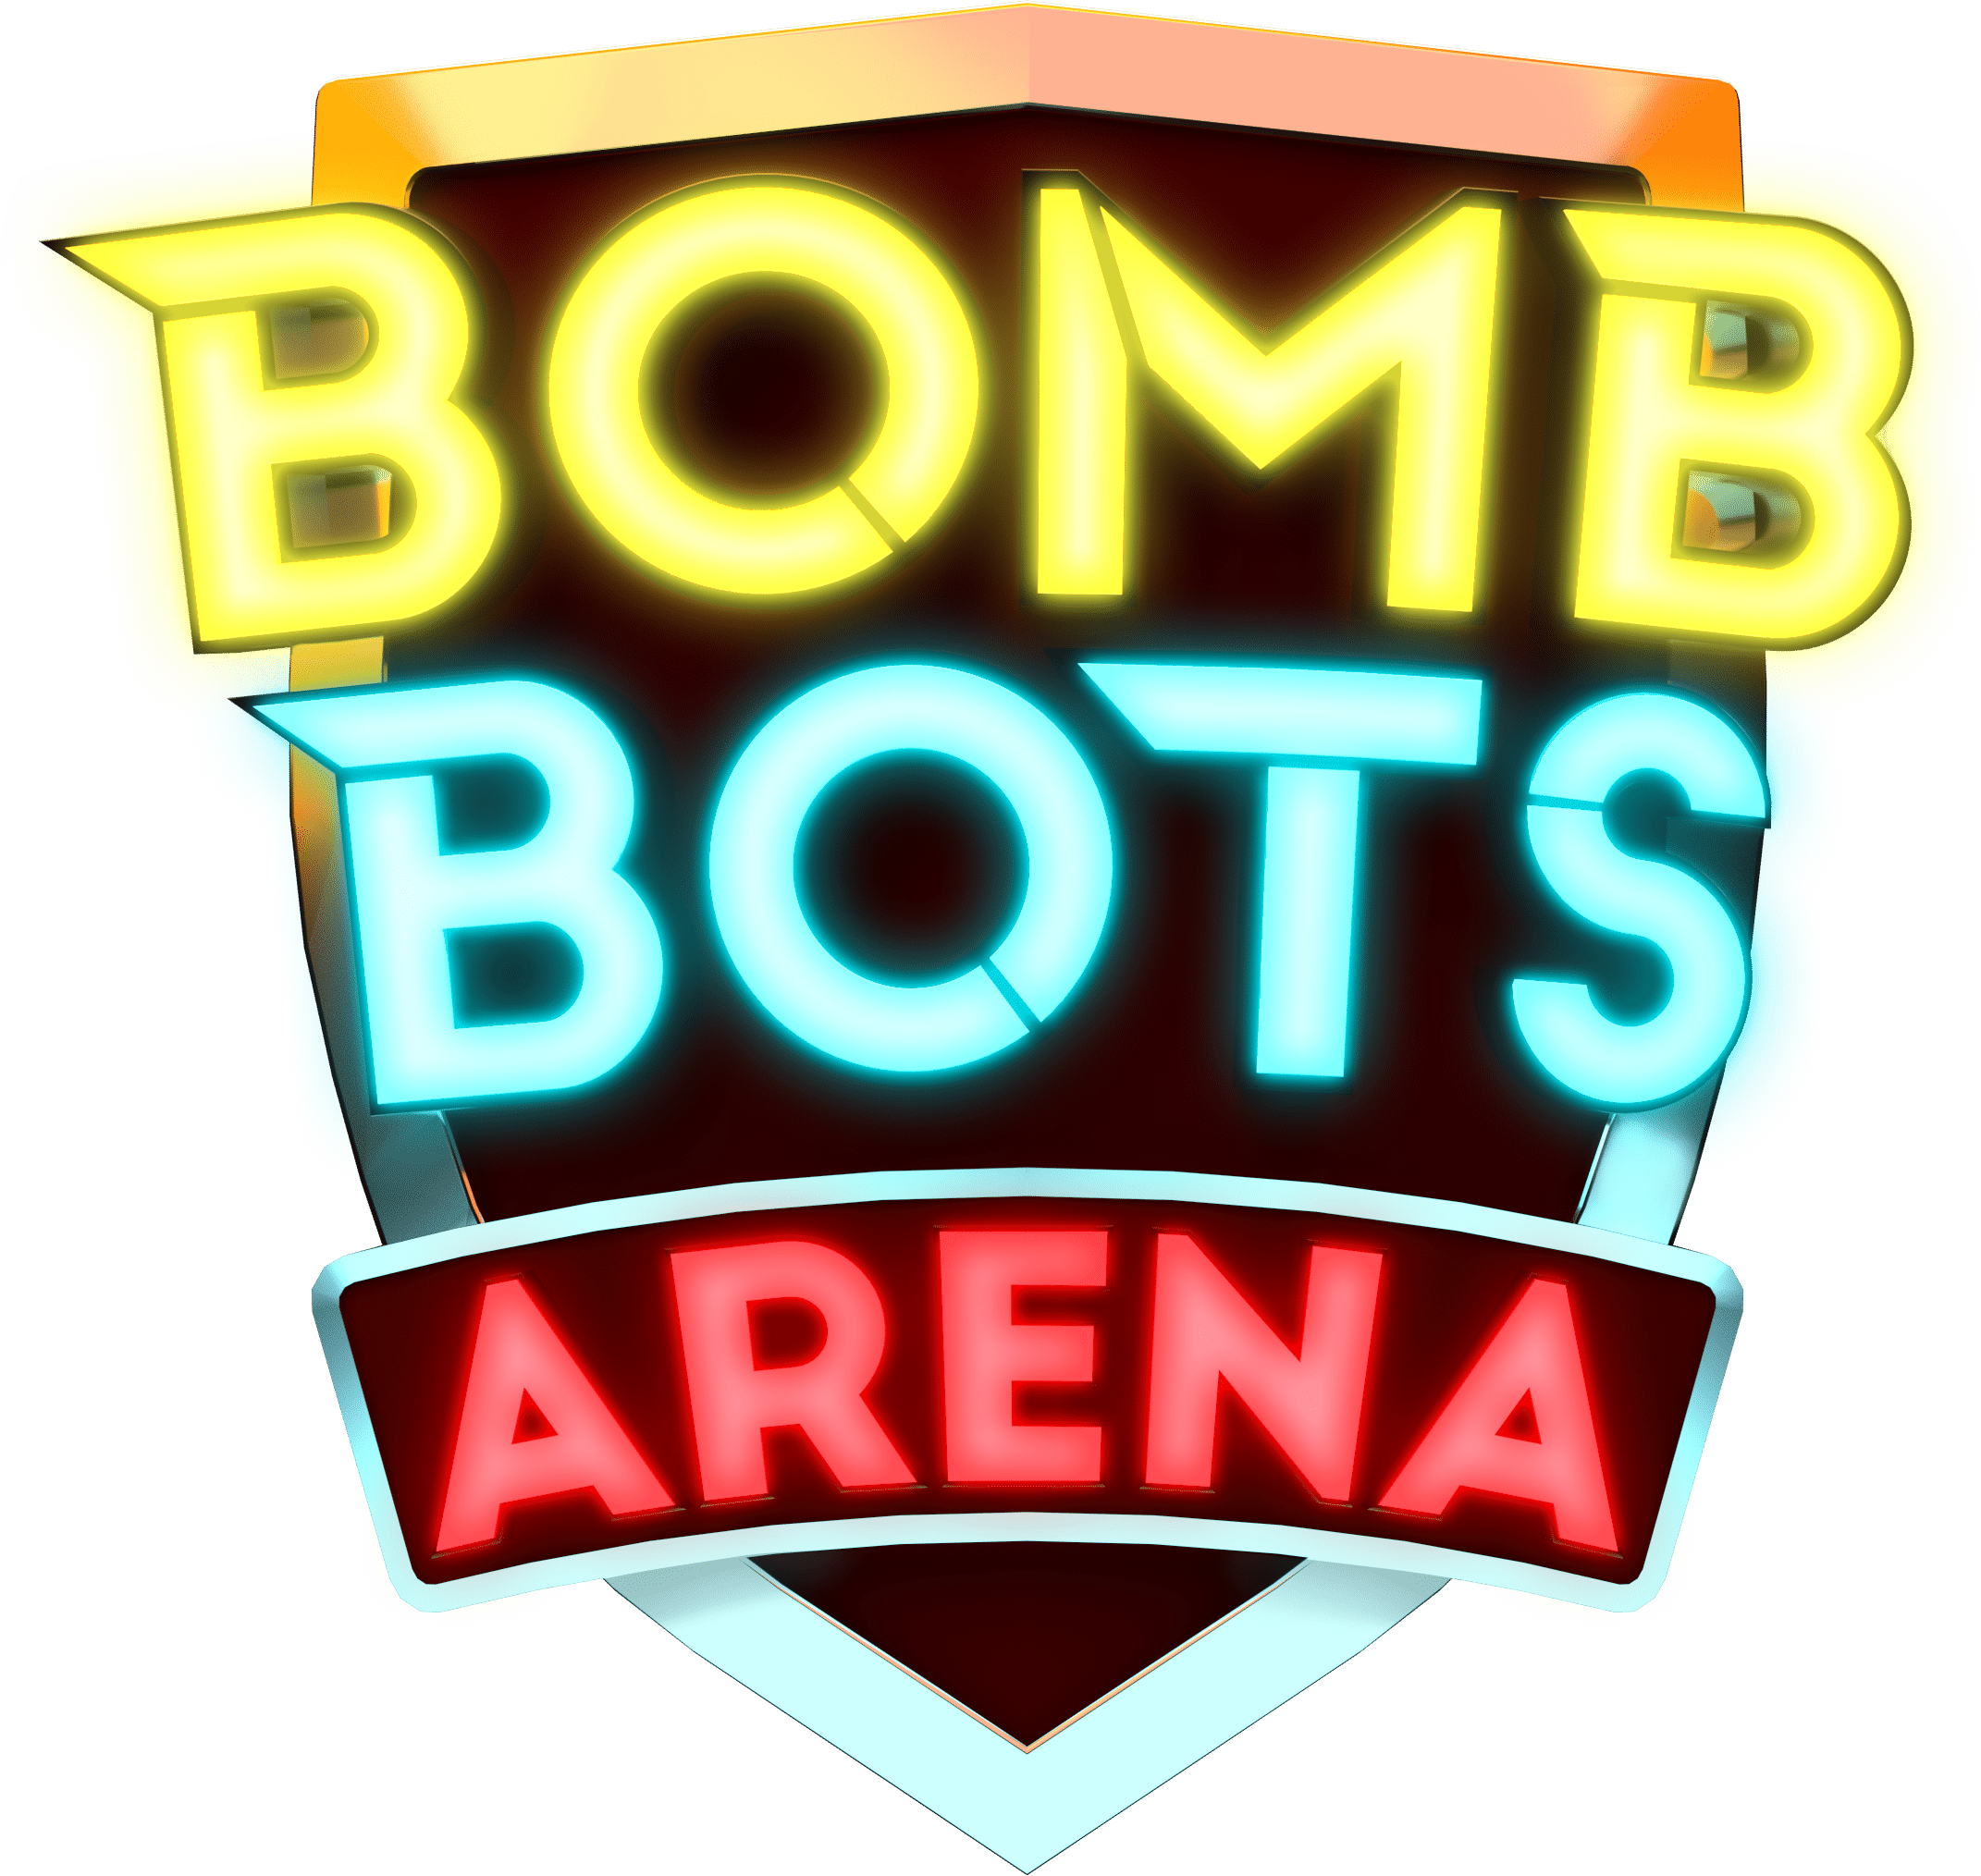 Bot Arena